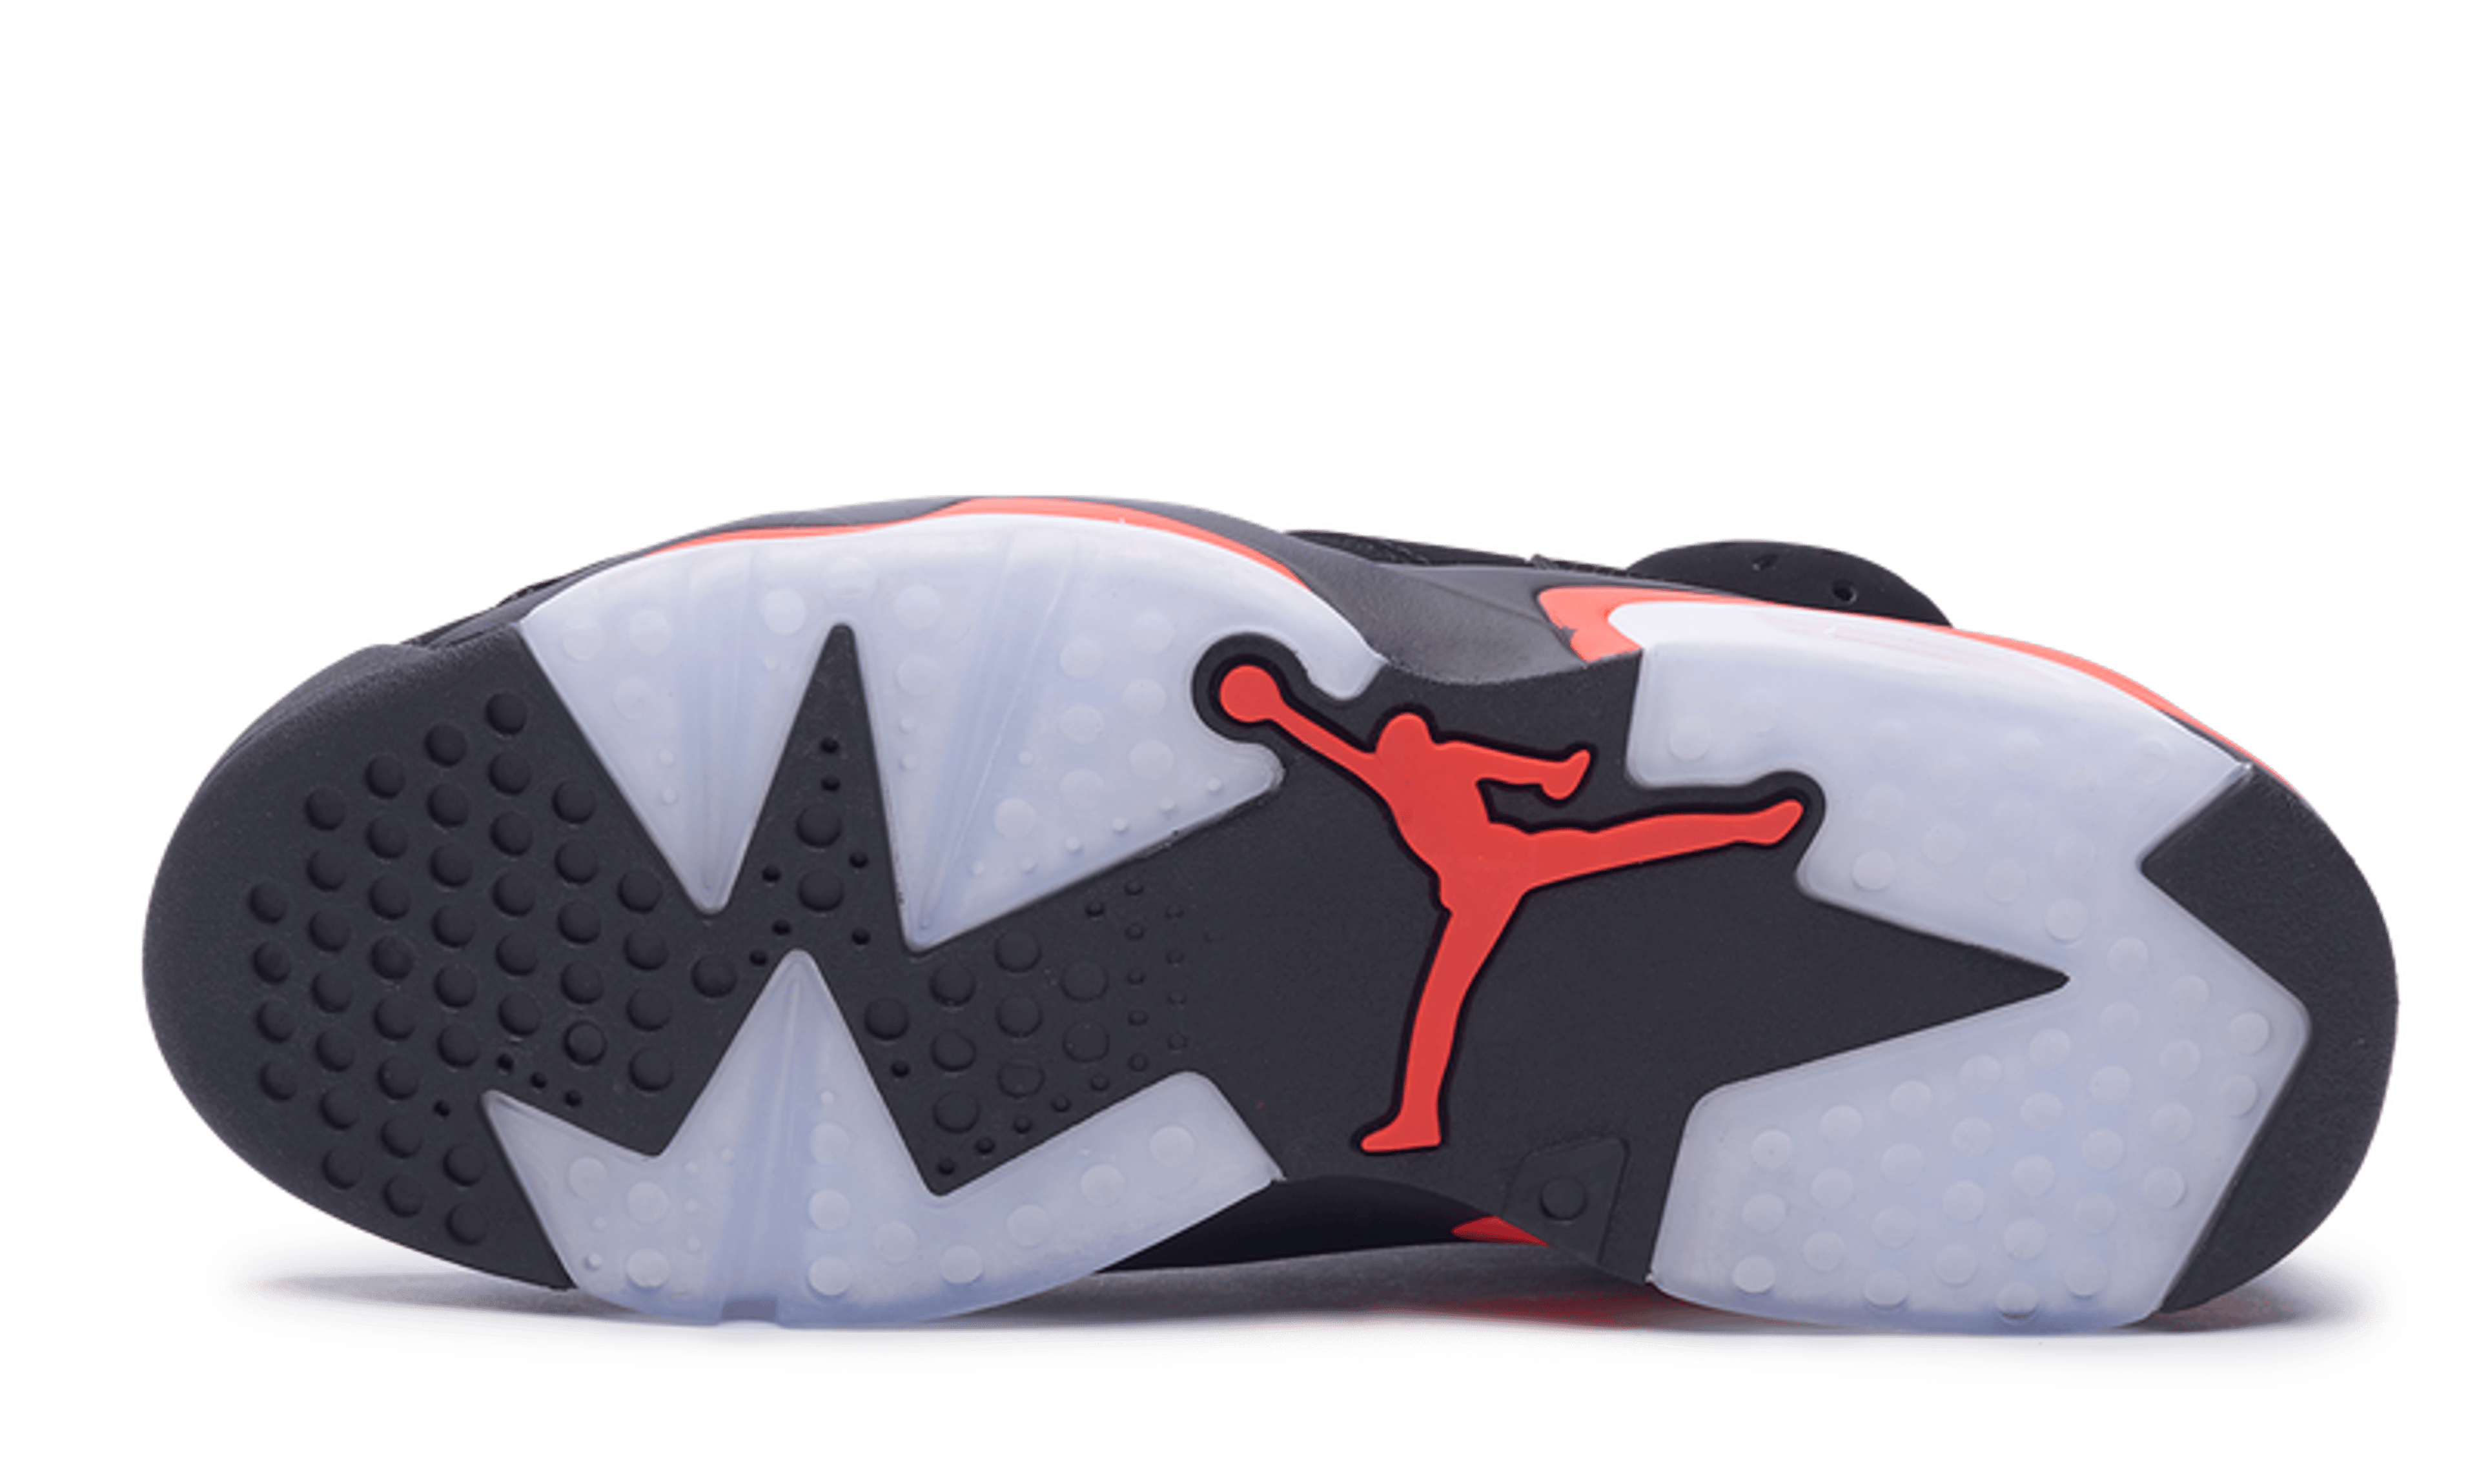 Alternate View 4 of Nike Jordan 6 Retro Black Infrared 2019 (384664-060) Men's Size 